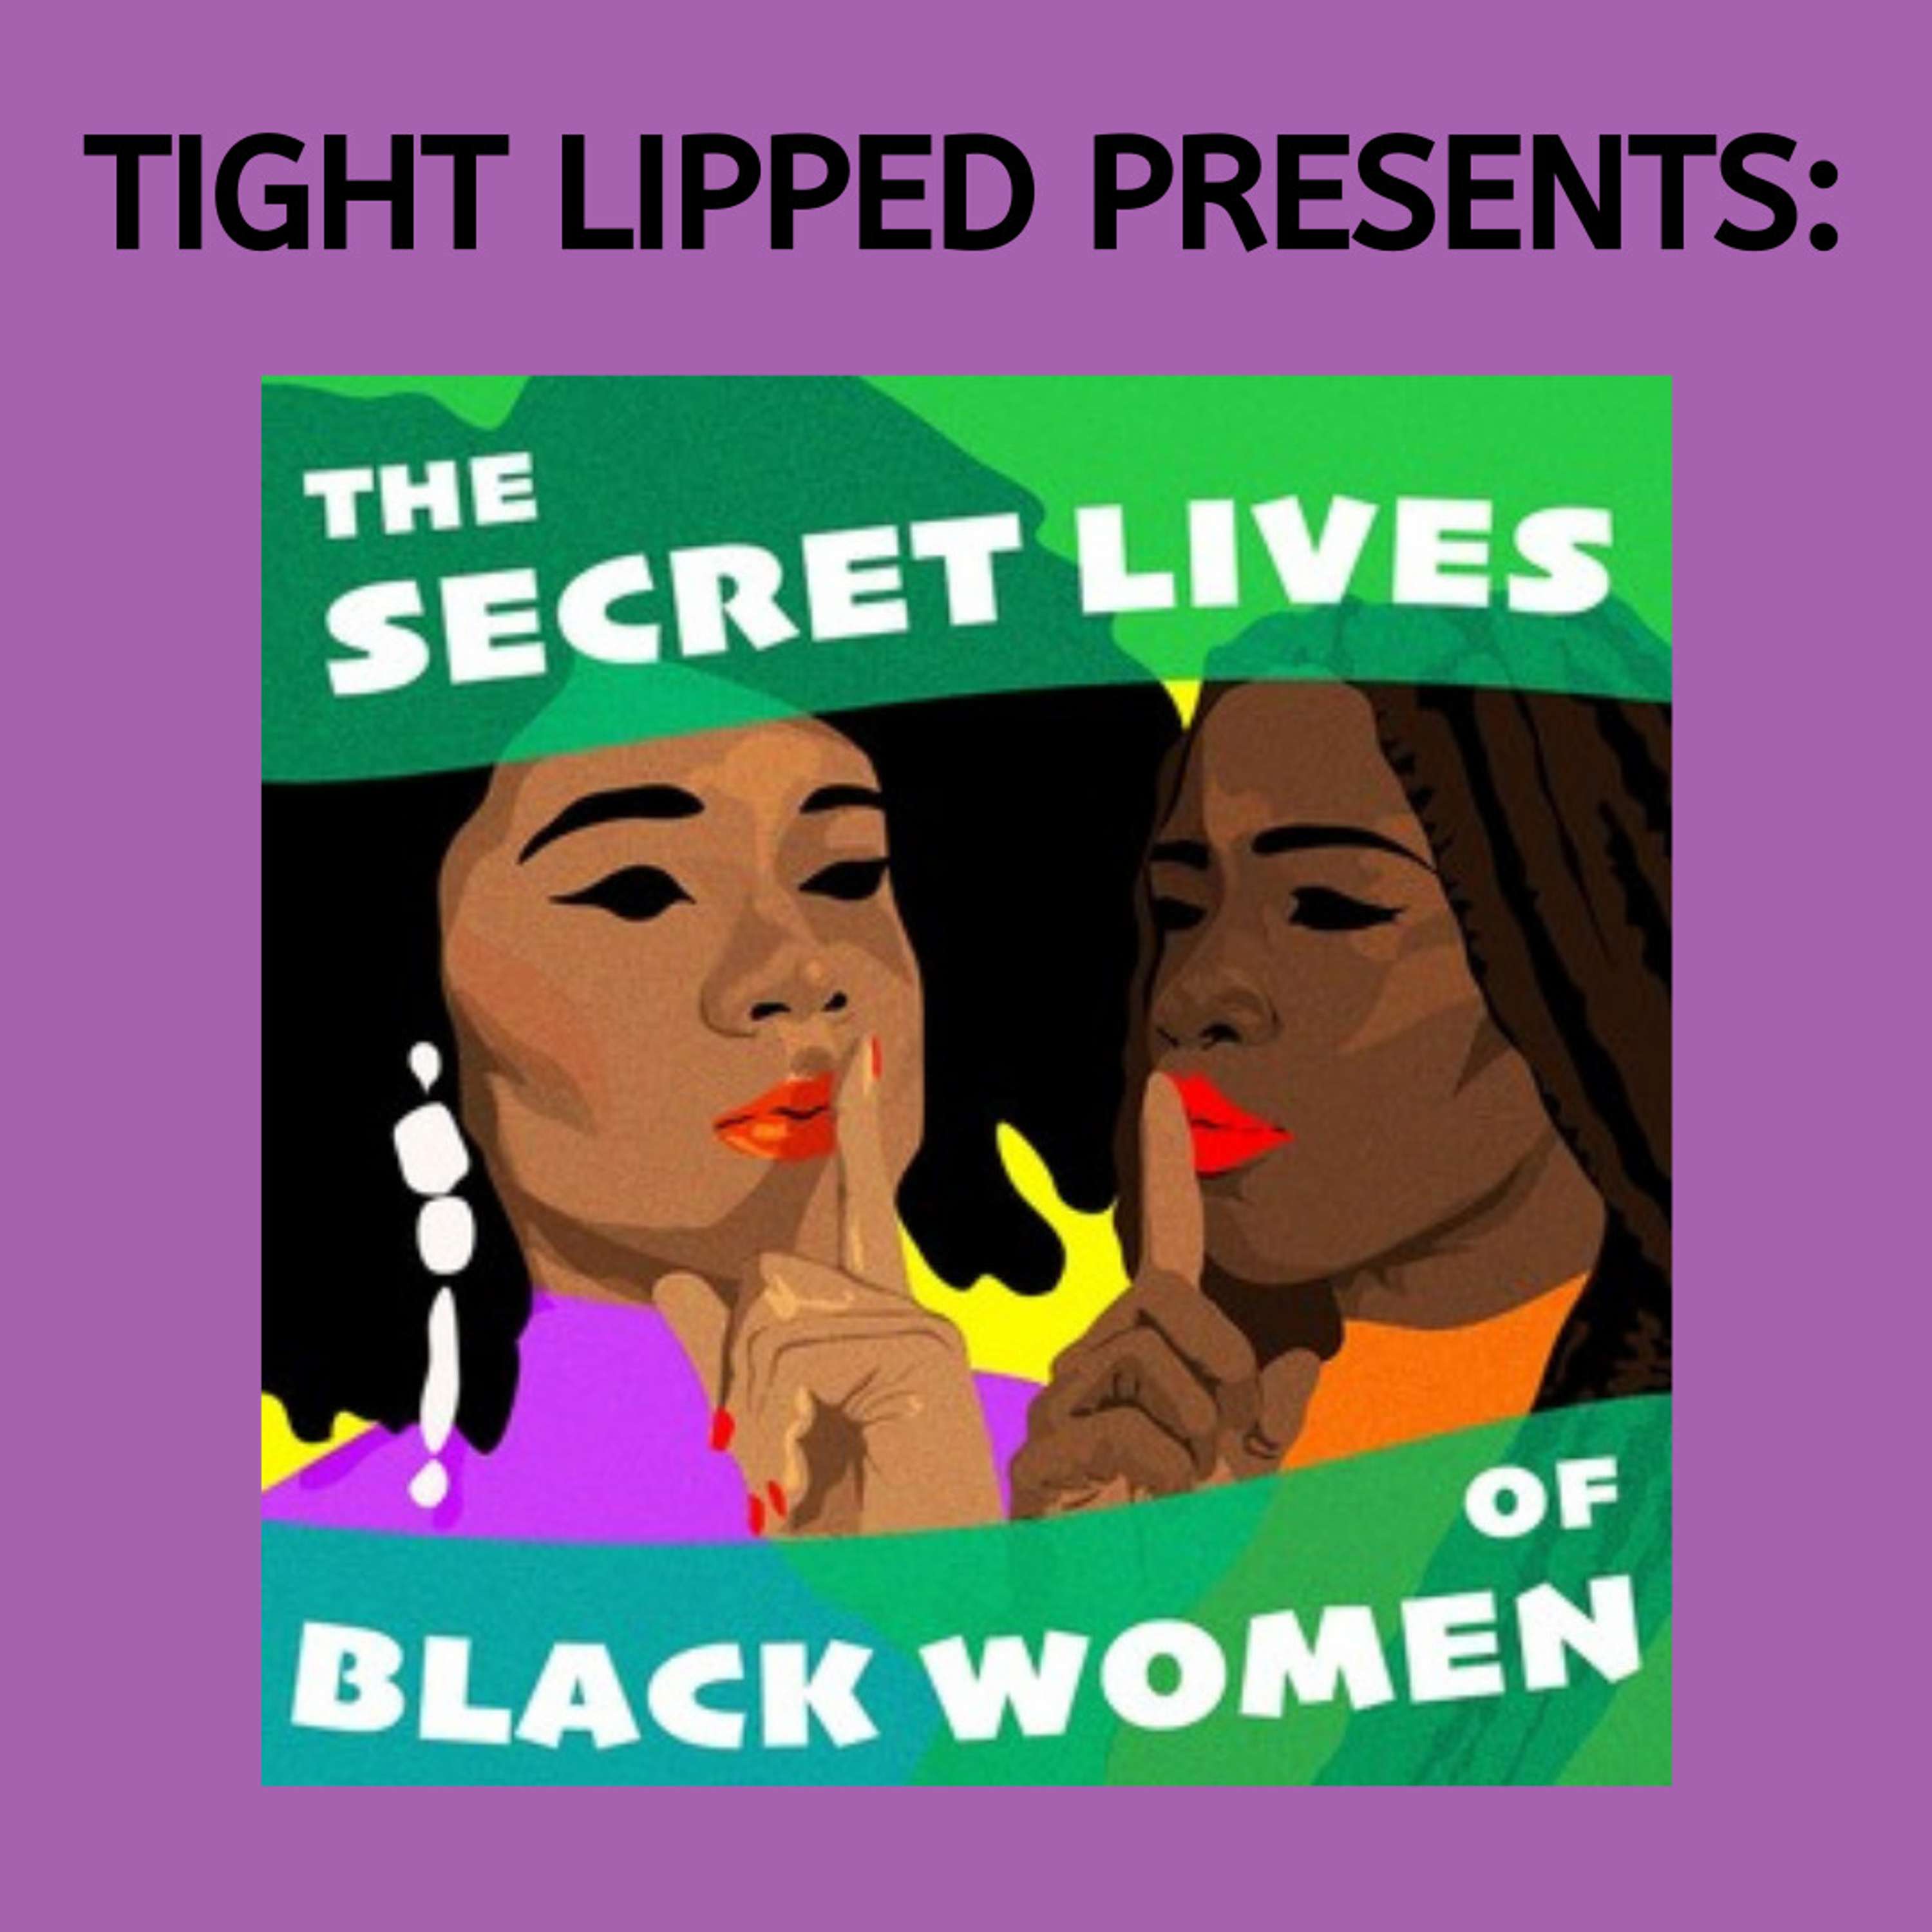 Tight Lipped Presents: The Secret Lives of Black Women